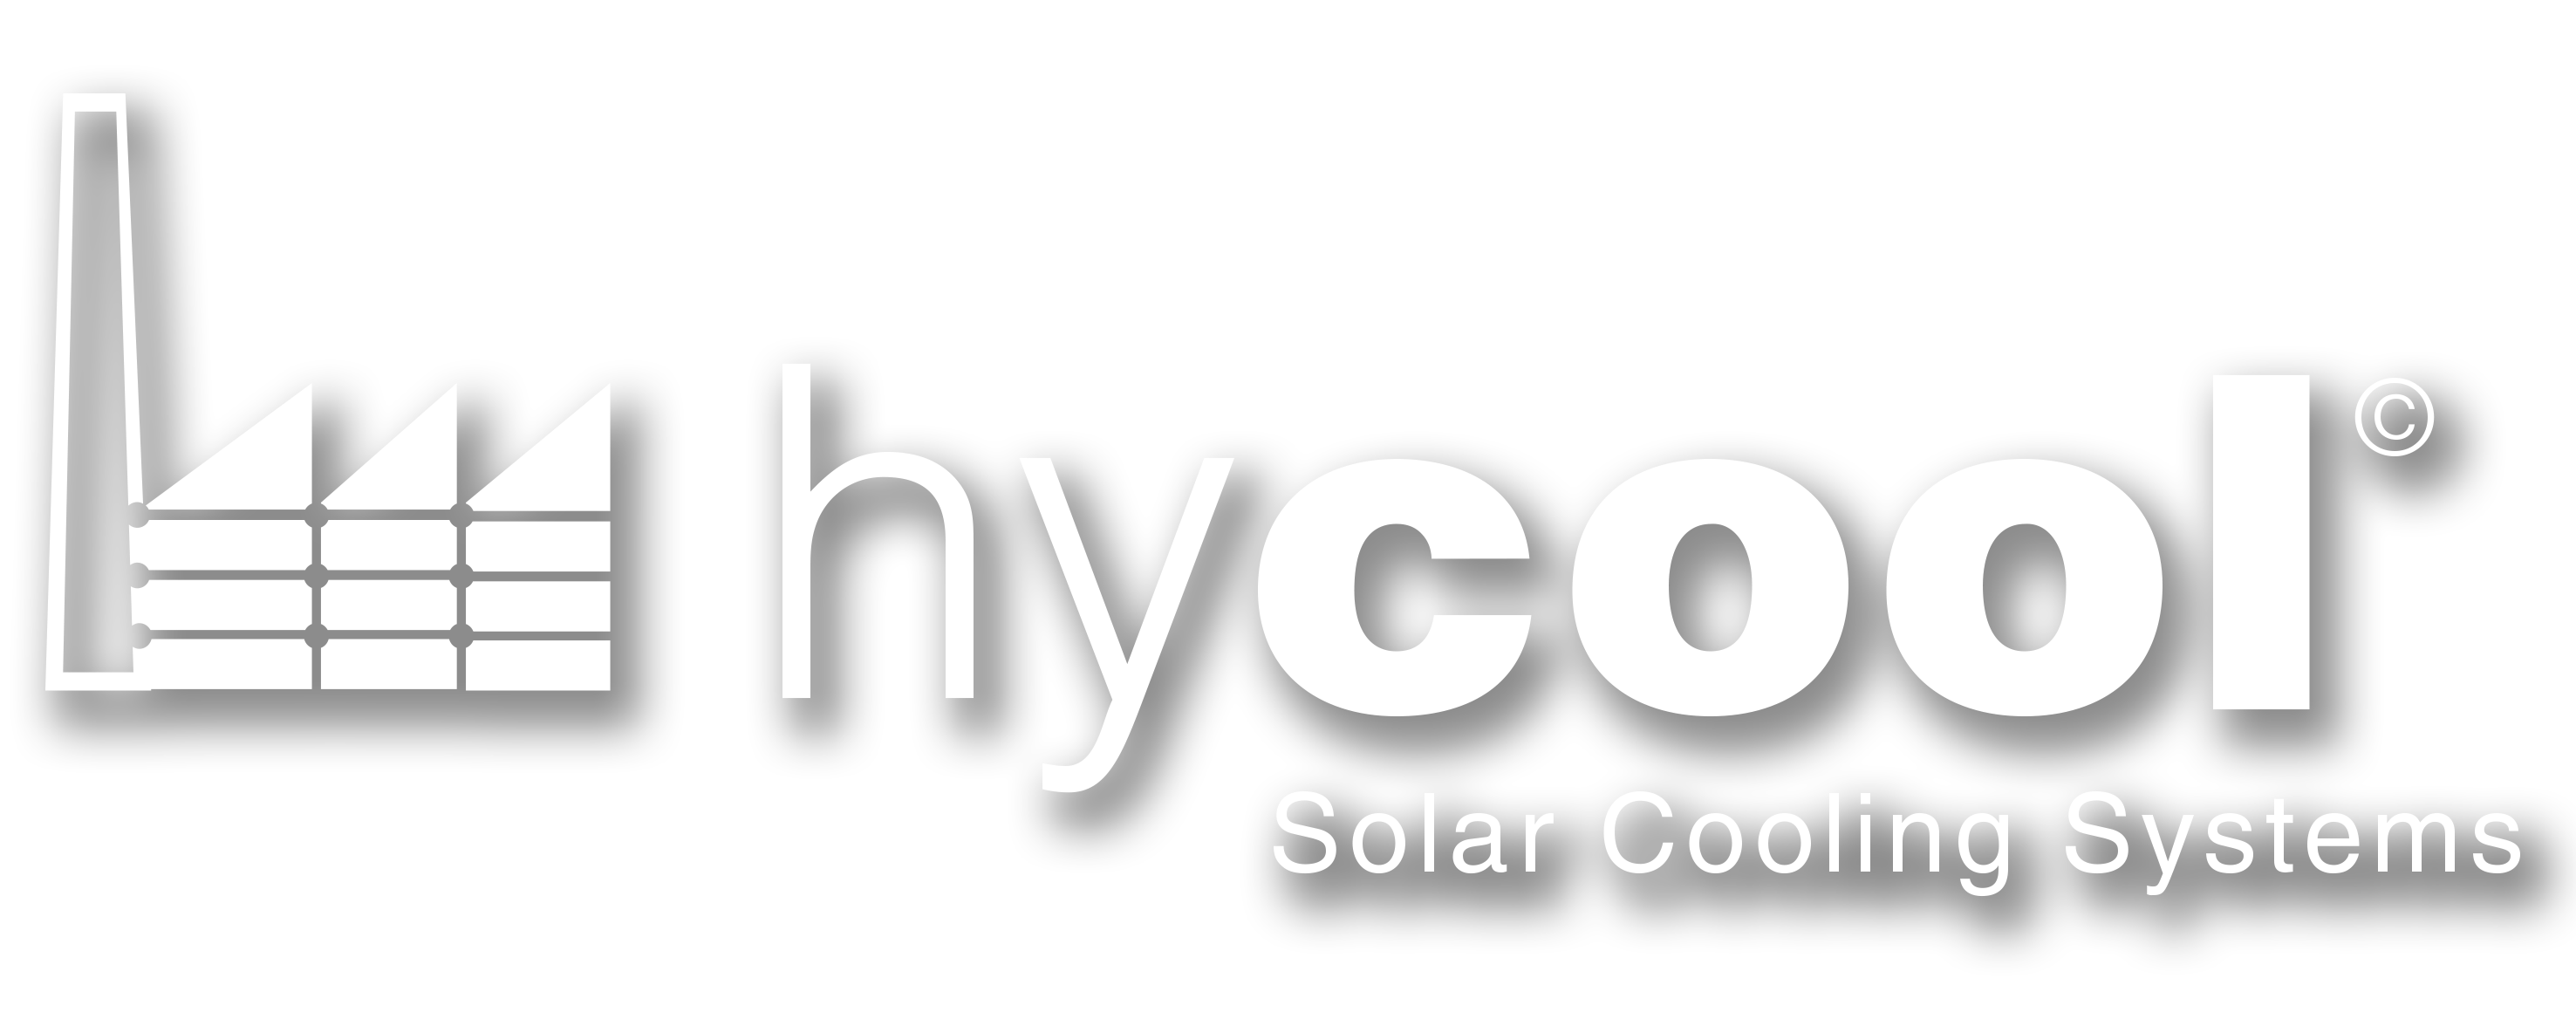 HyCool